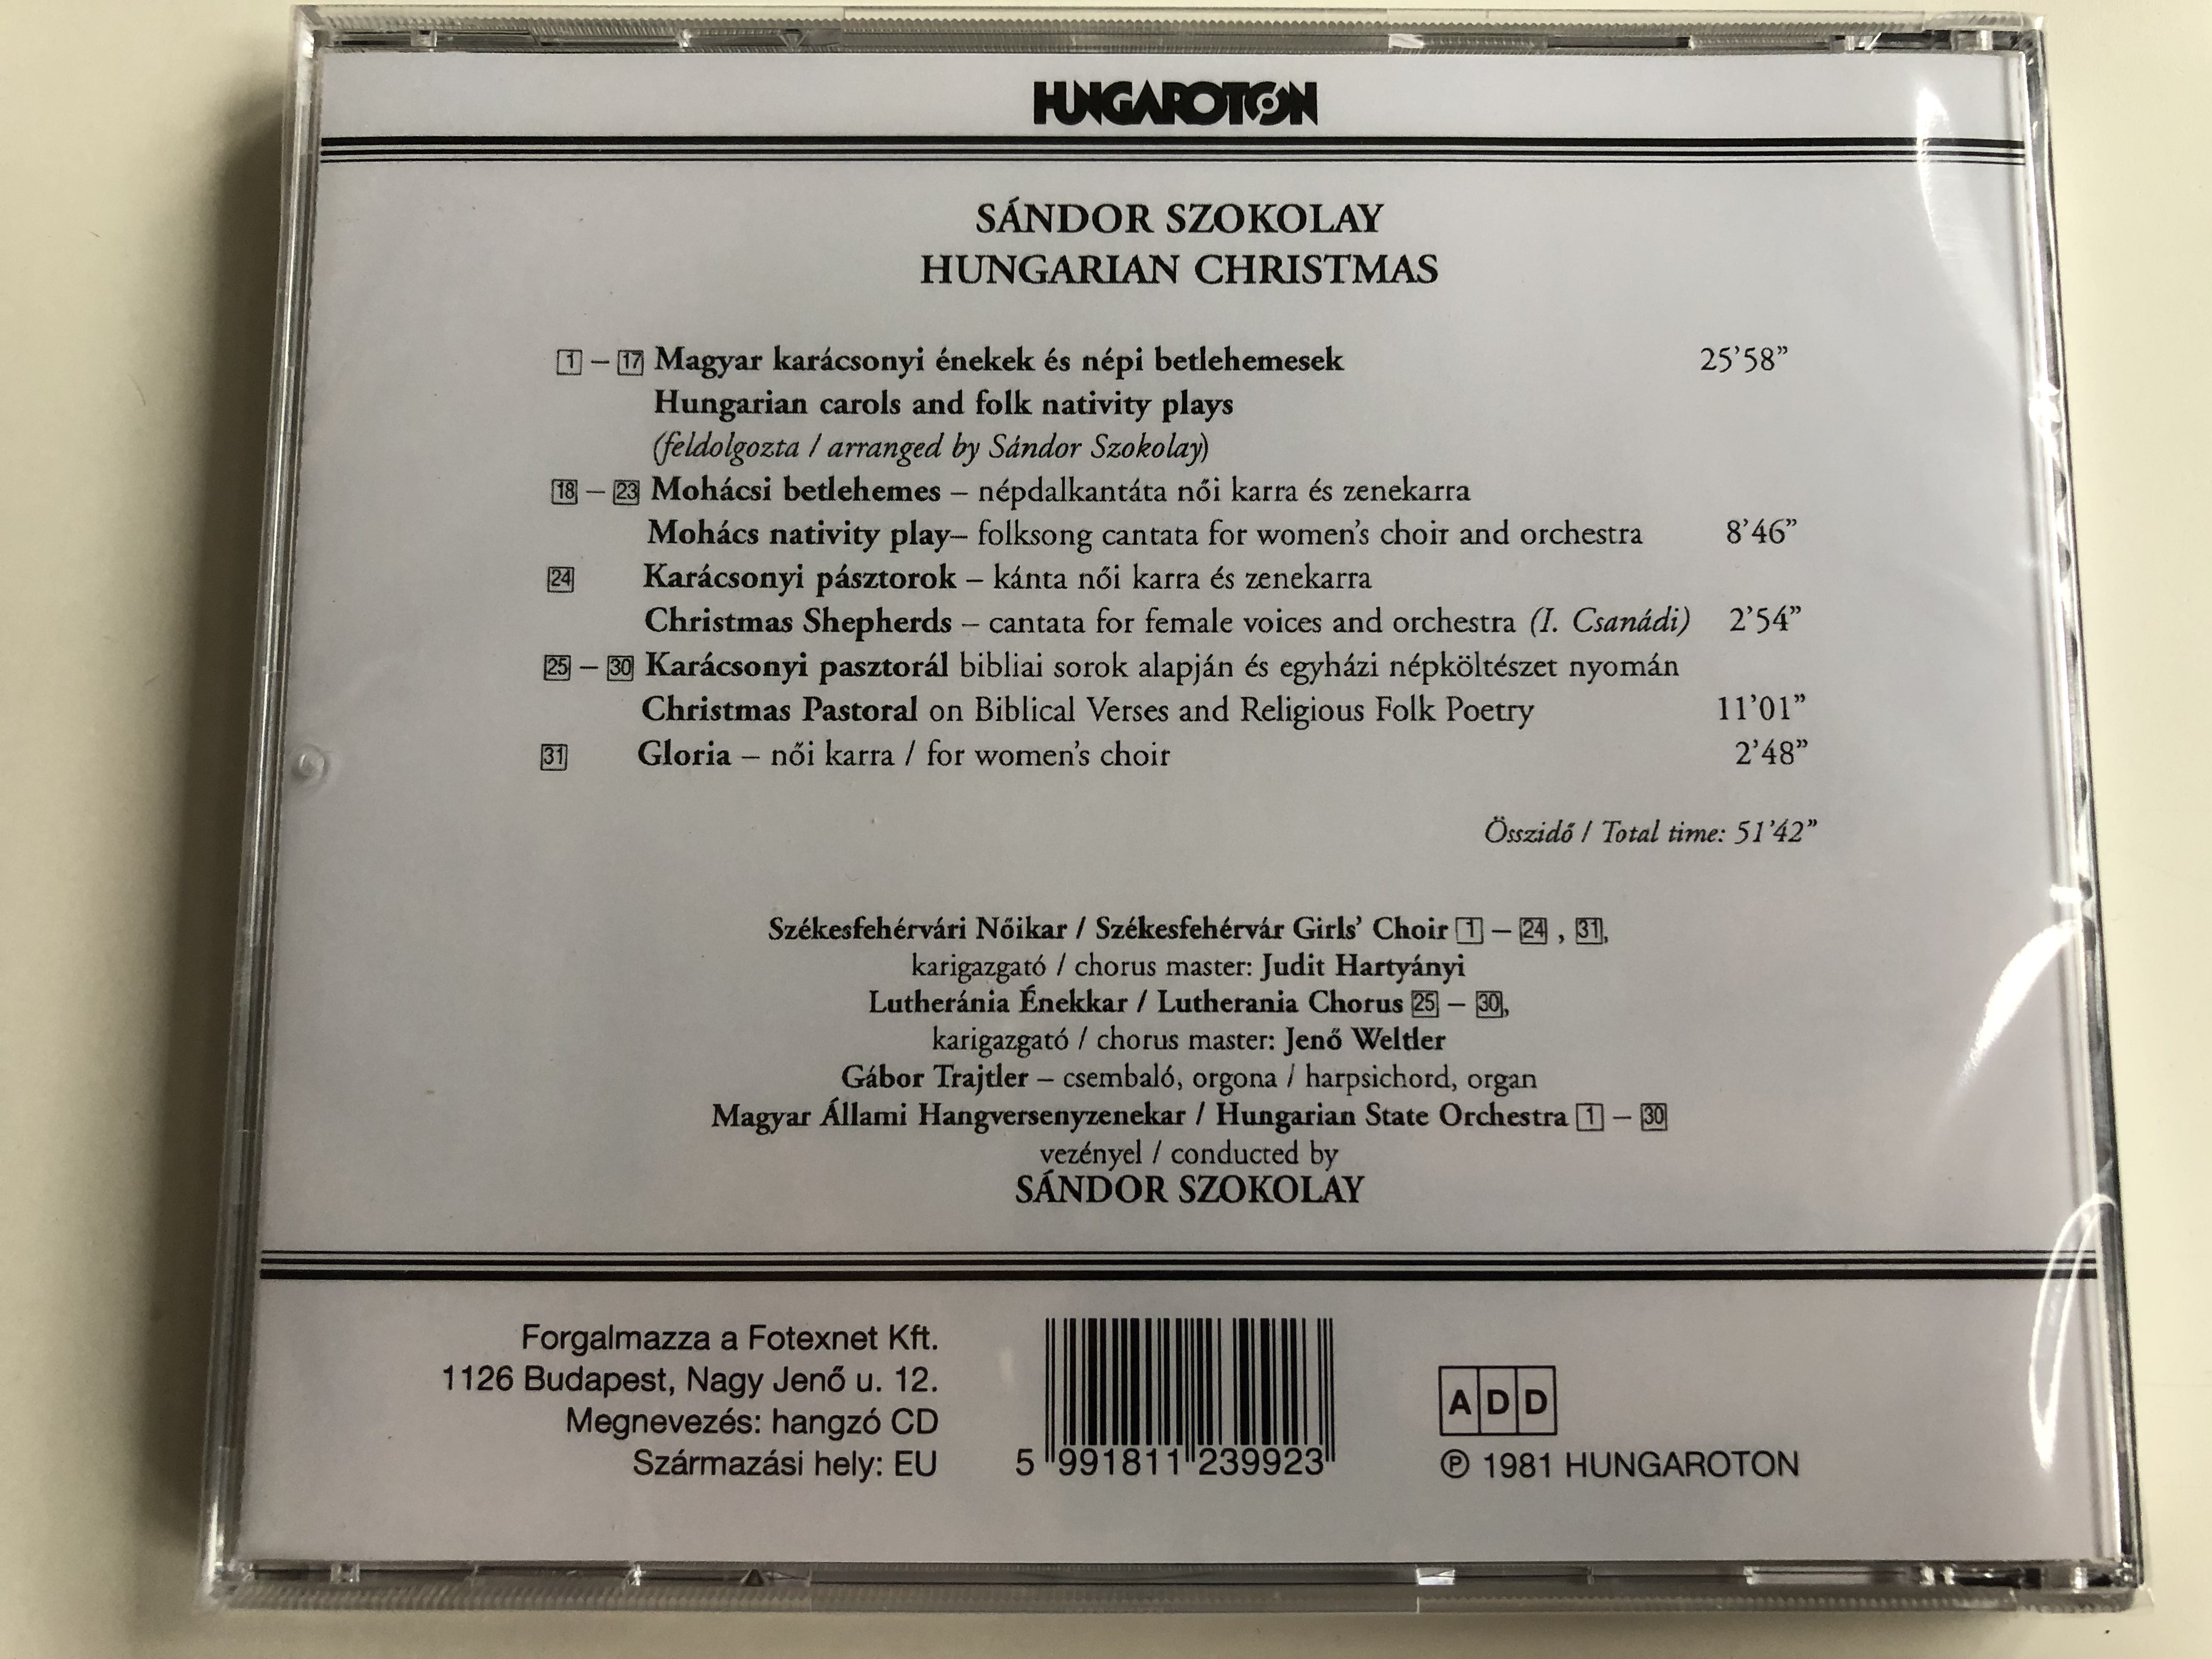 szokolay-sandor-magyar-karacsony-hungarian-christmas-hungaroton-classic-audio-cd-1981-stereo-hcd-12399-3-.jpg